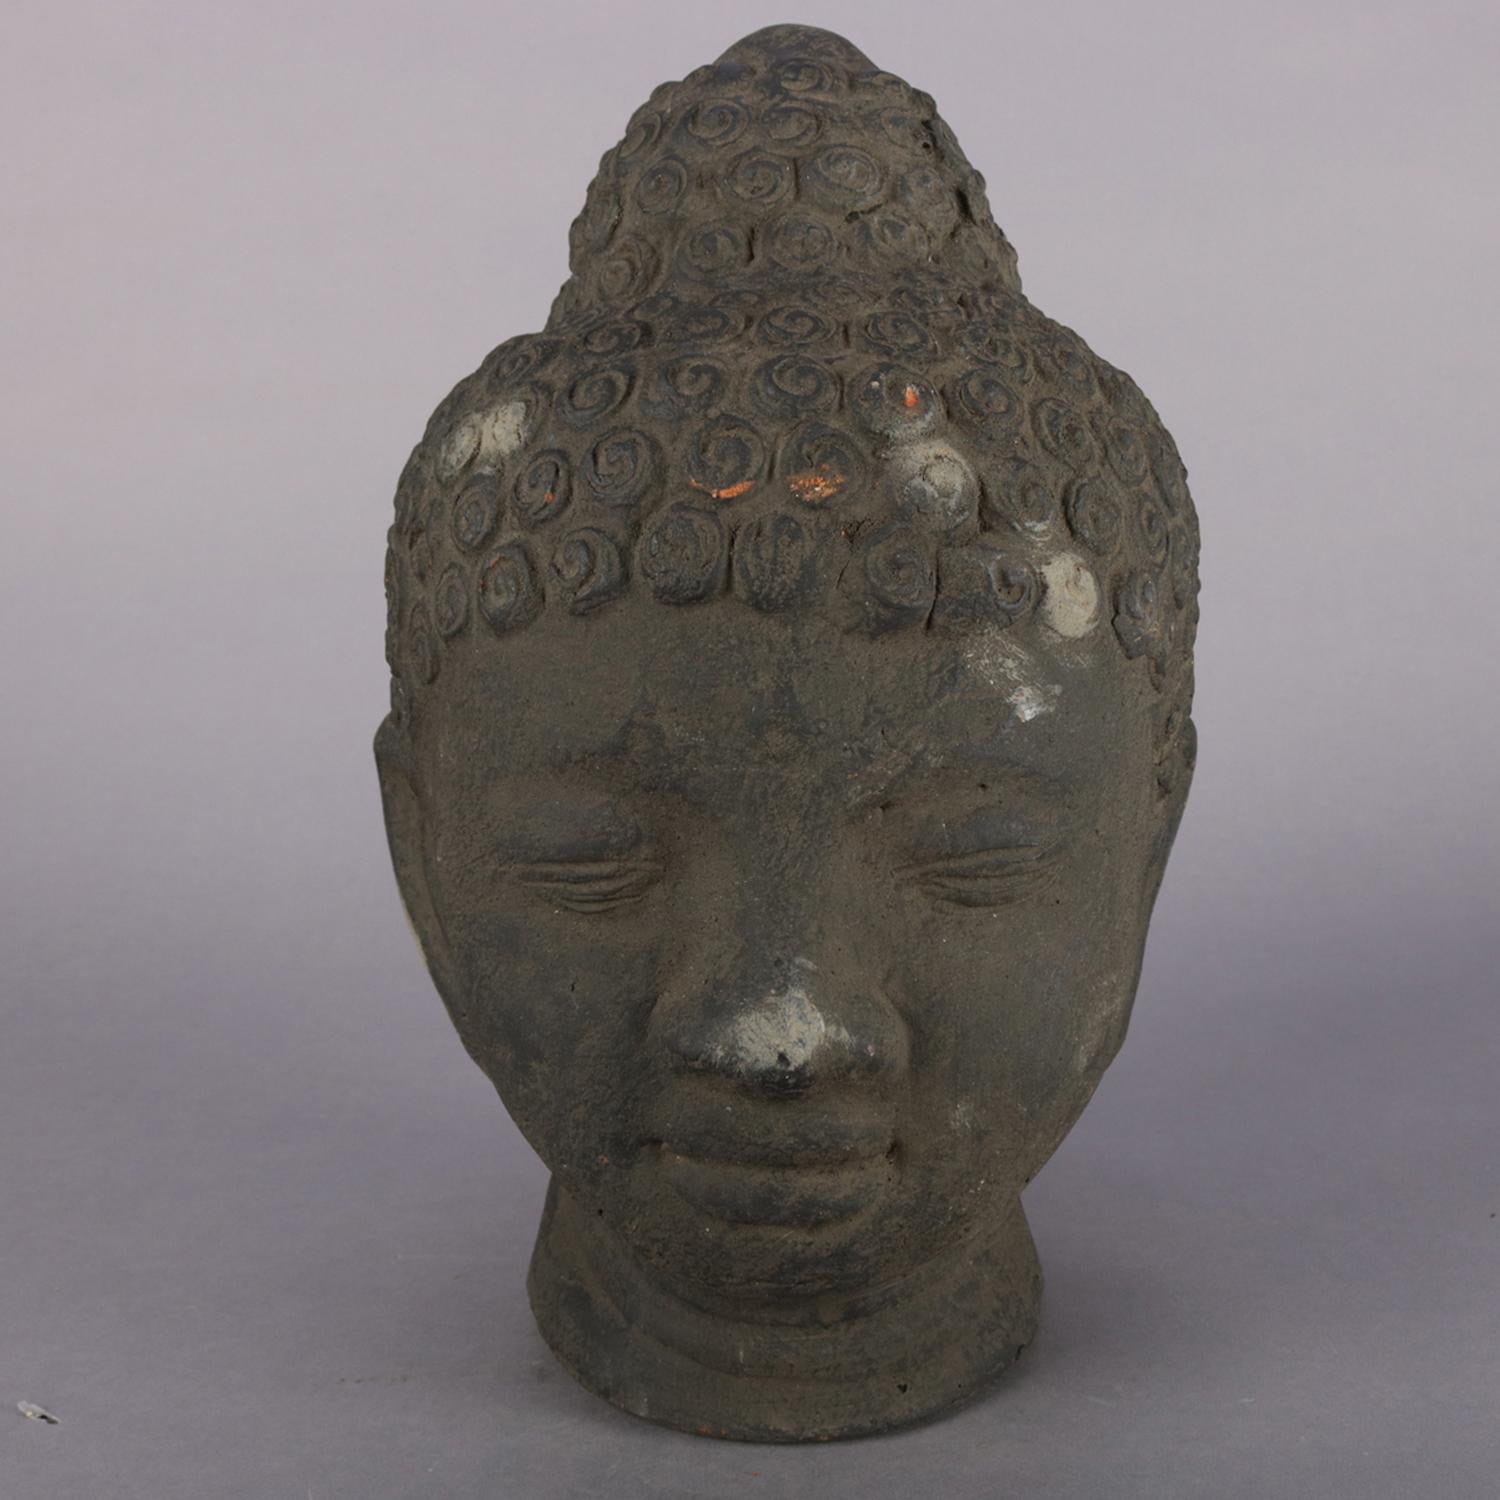 Ebonized terracotta head sculpture features meditating Shakyamuni Buddha, 20th century.

Measures: 13